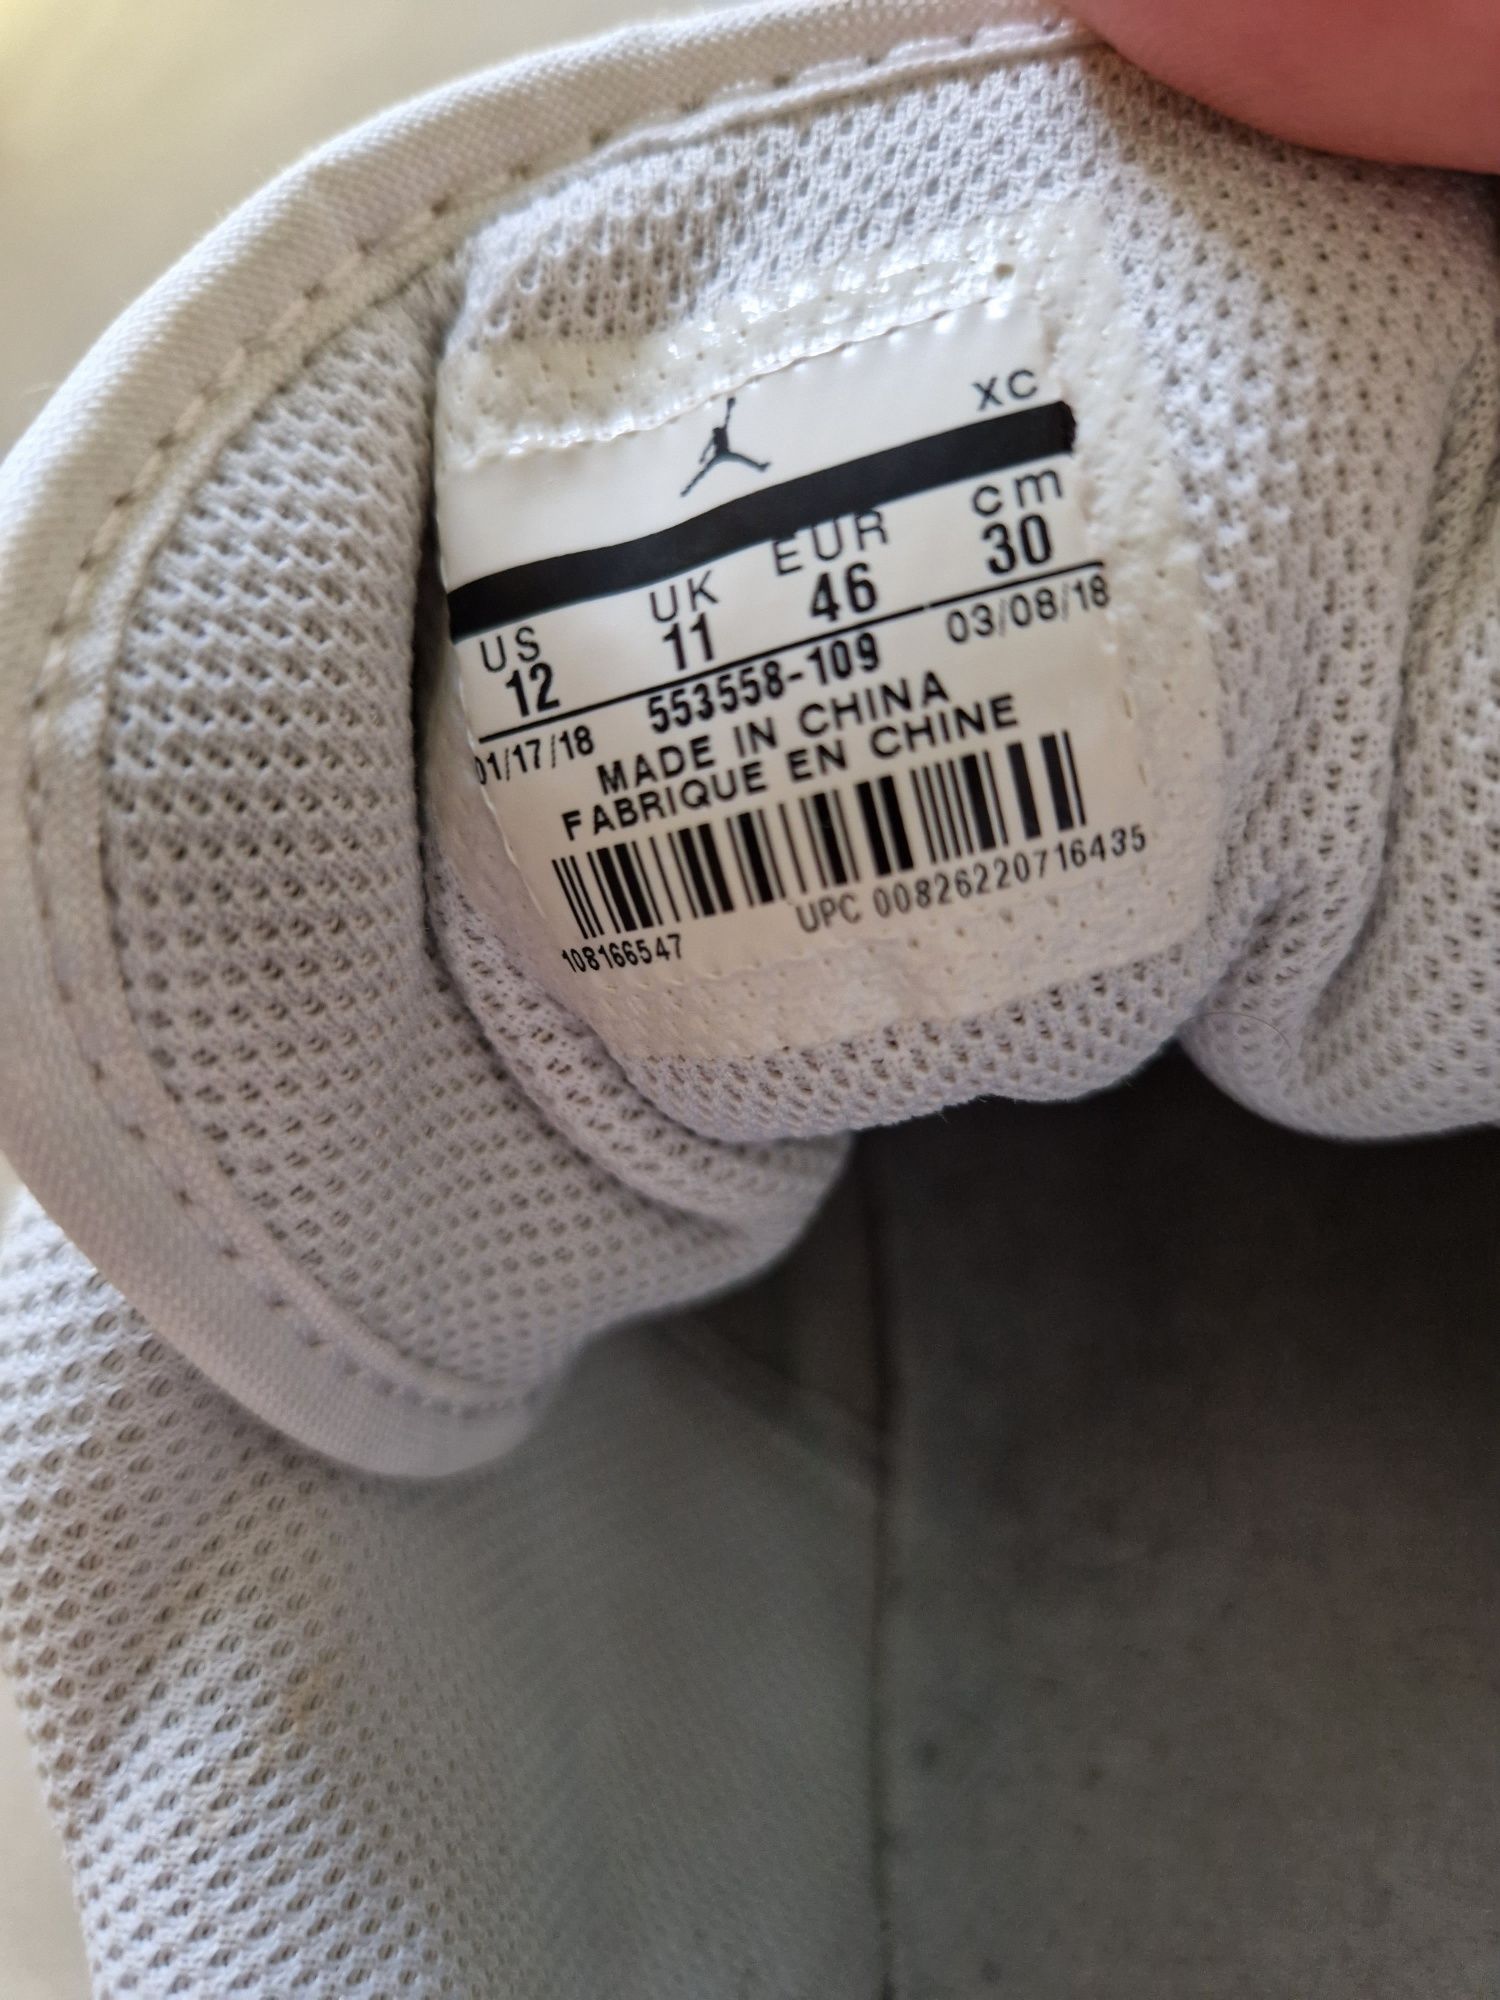 Nike Air Jordan 1 Low White rozmiar 46